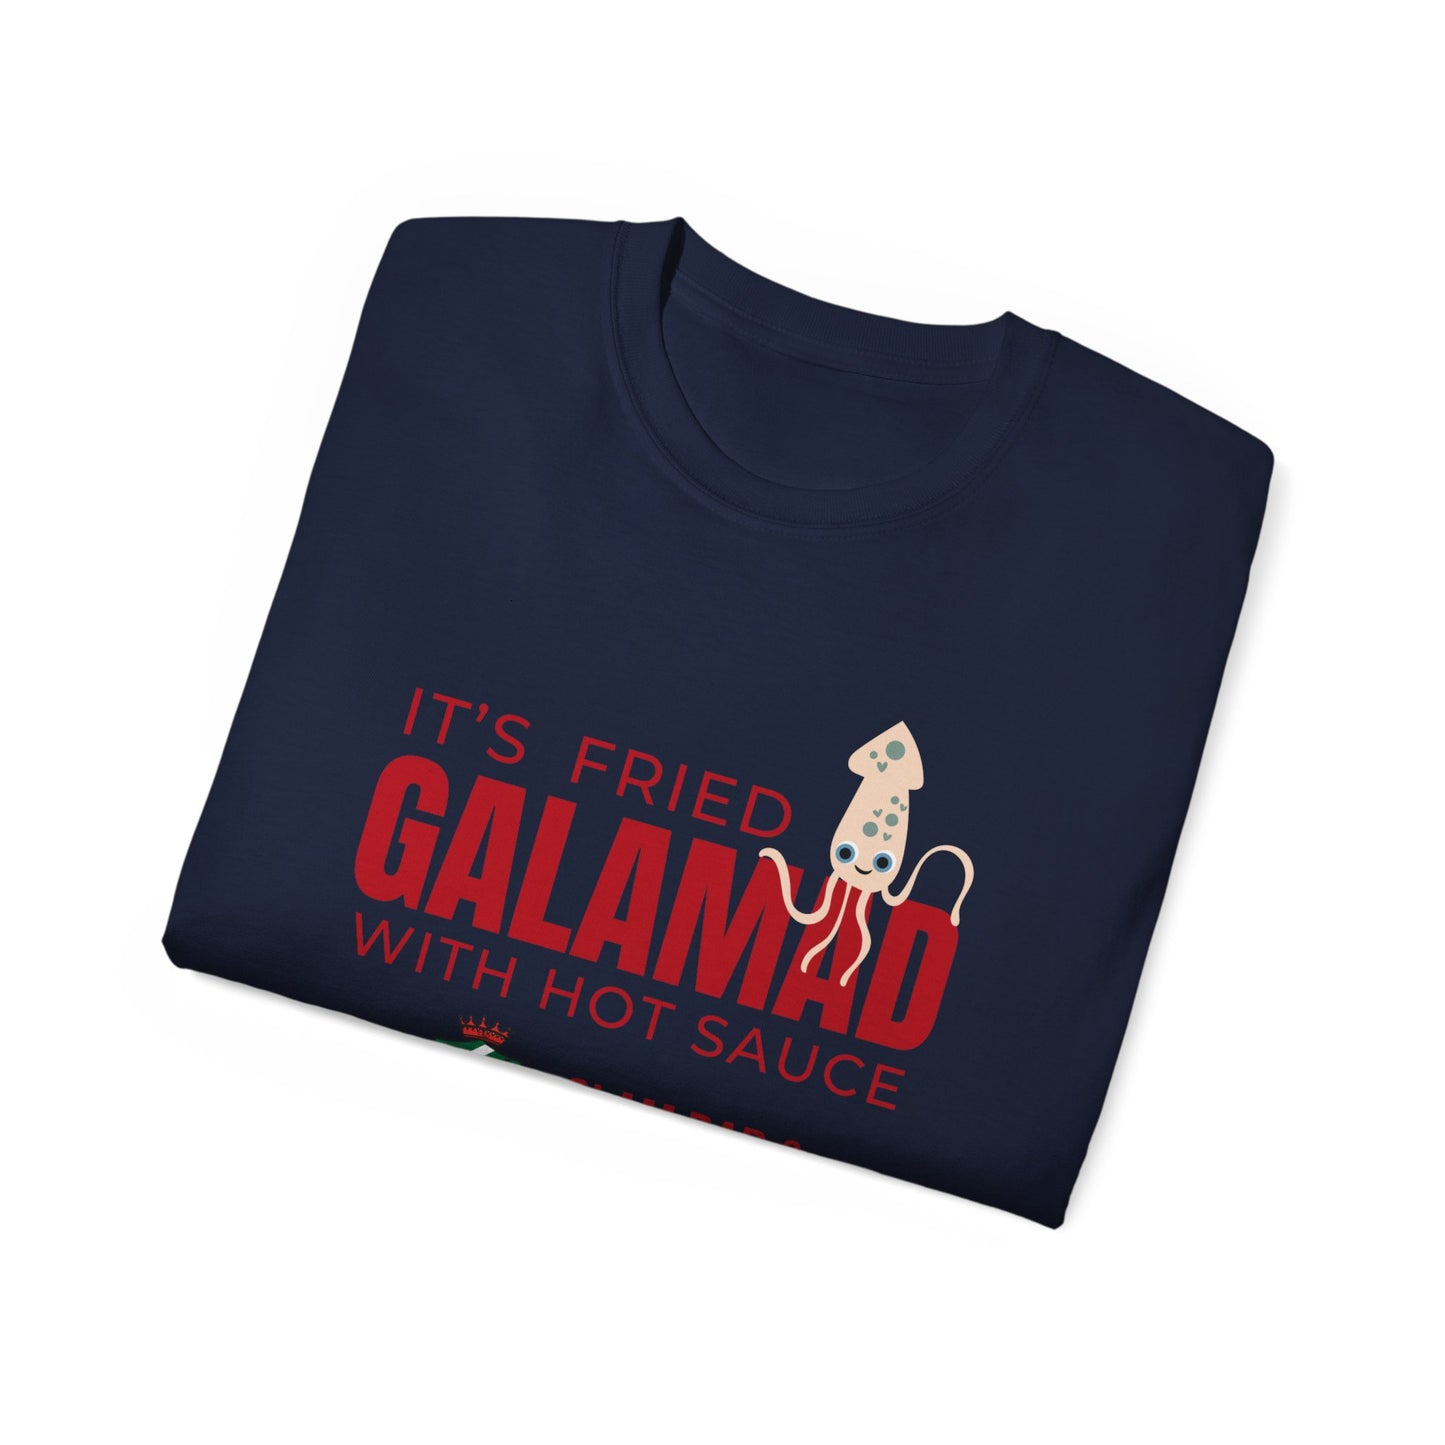 It's Fried "GALAMAD" T-Shirt